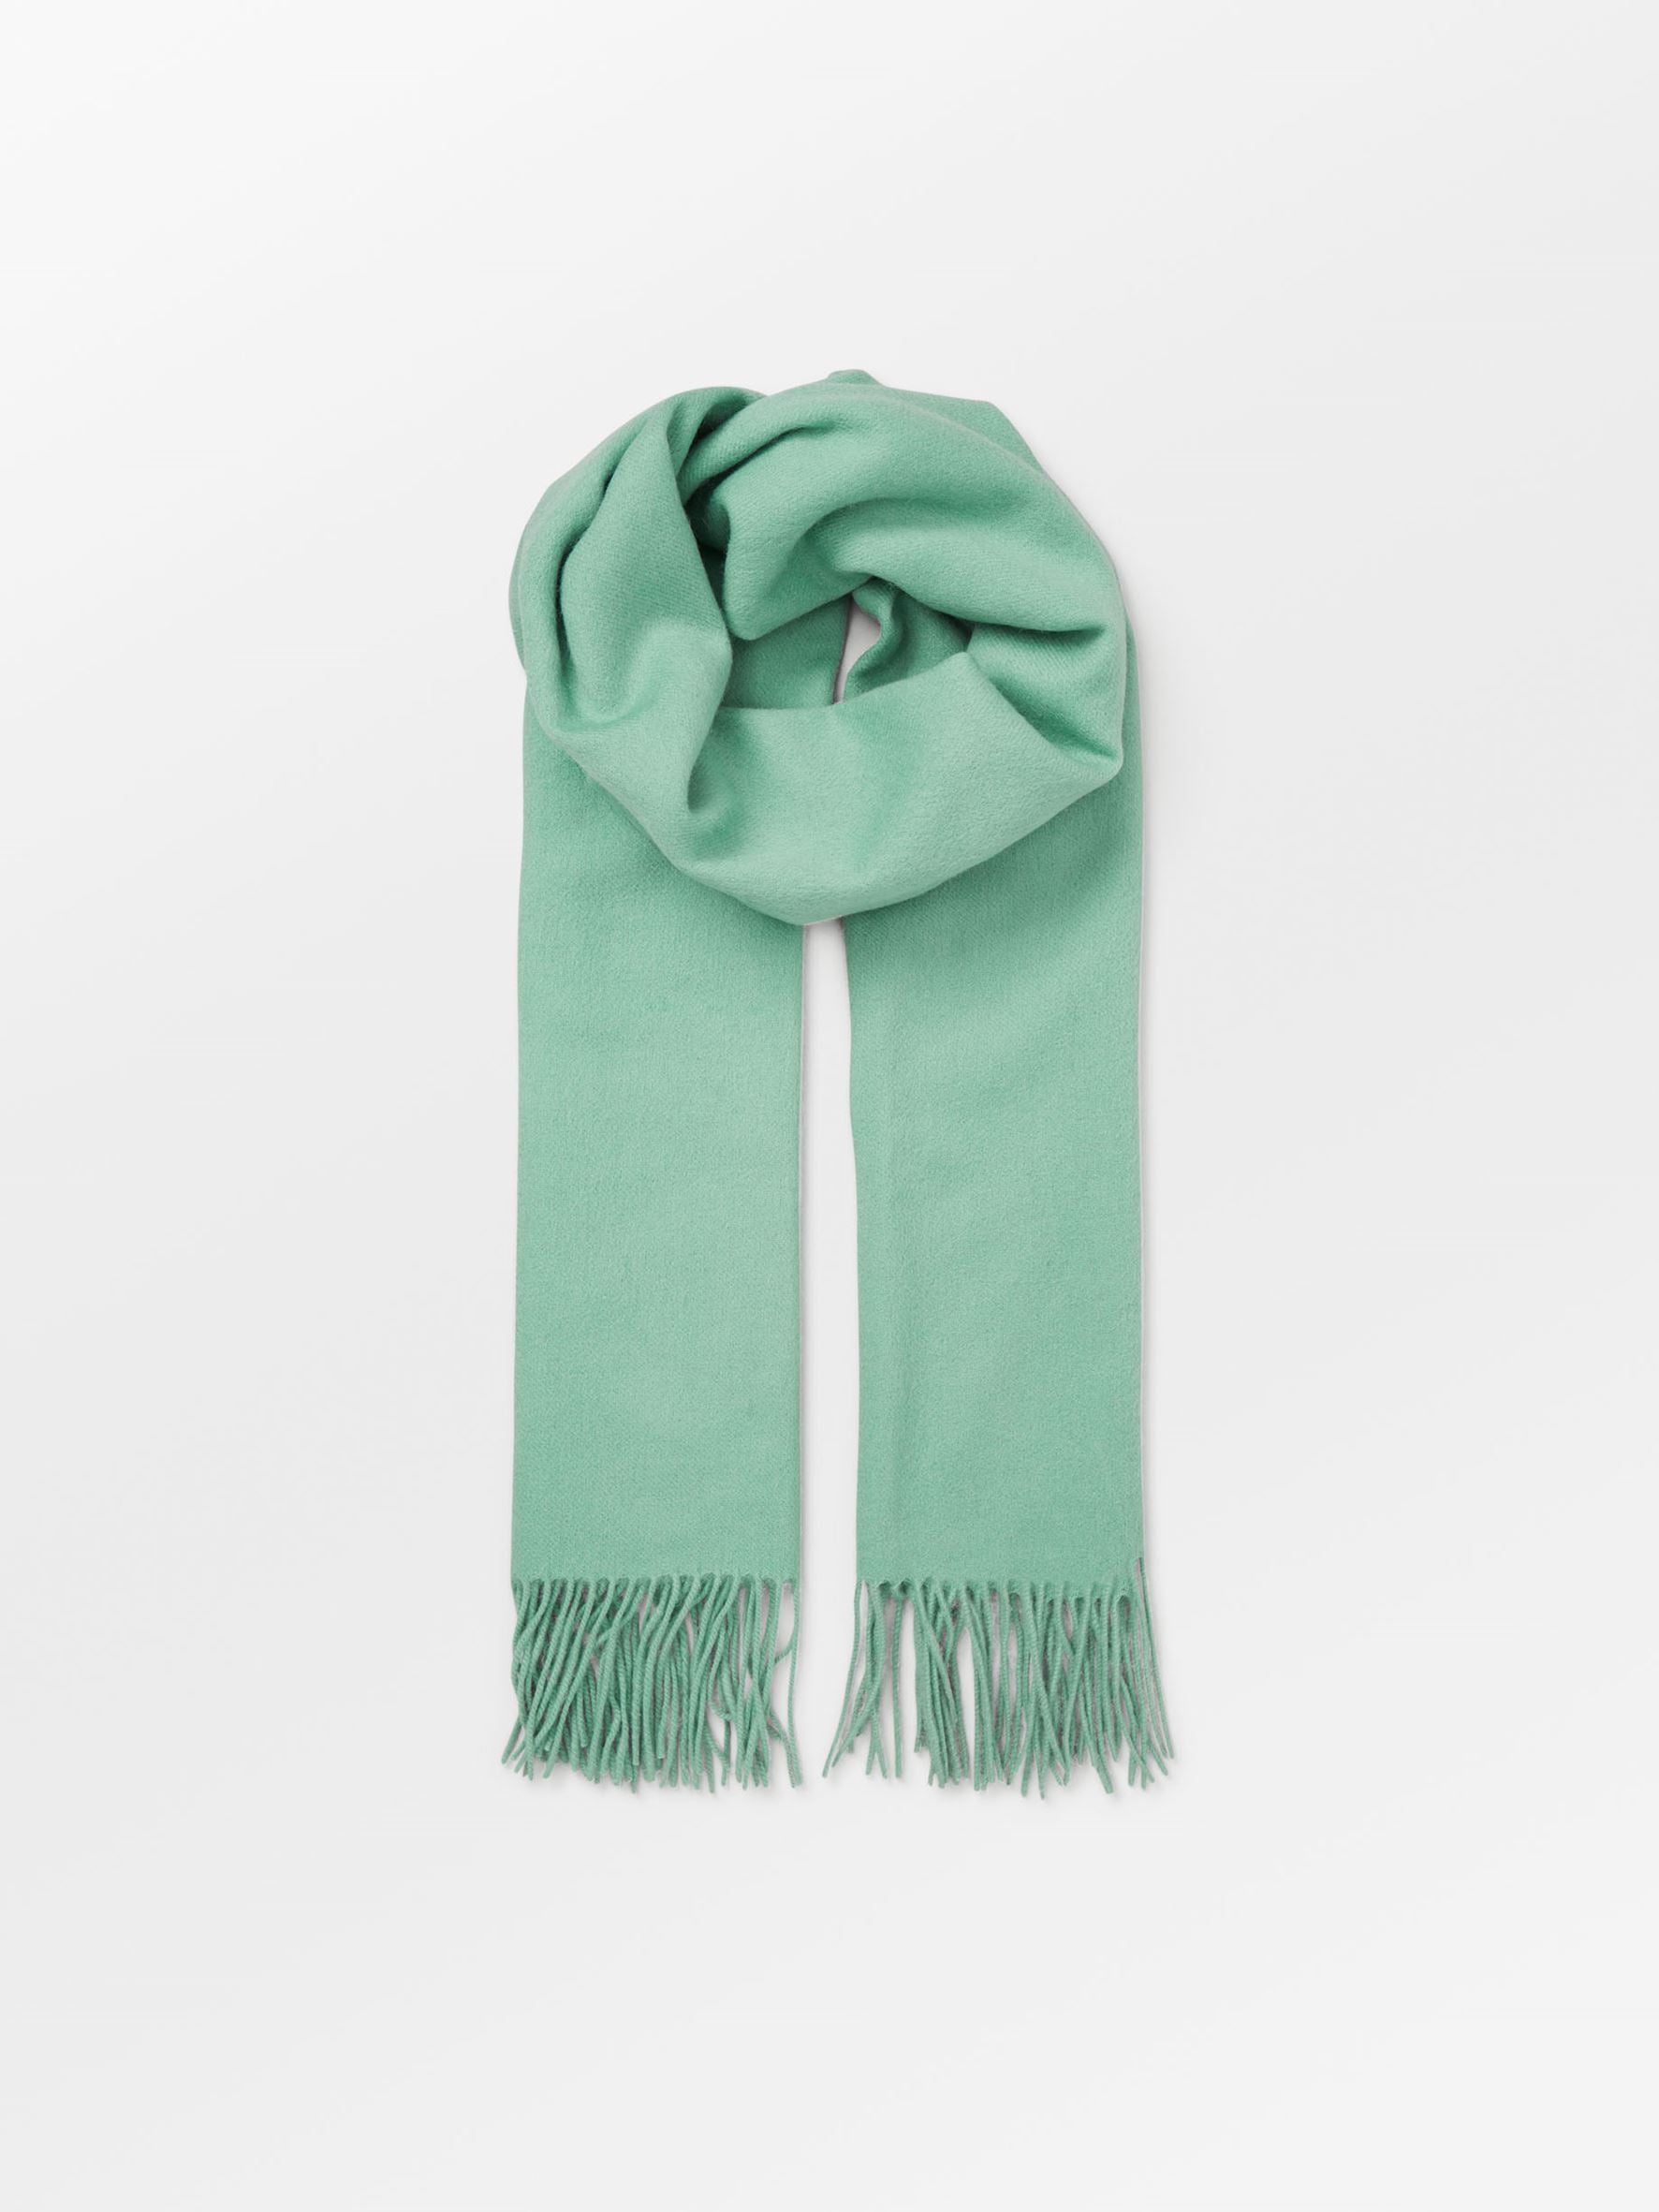 Becksöndergaard, Crystal Edition Scarf - Brigth Blue/Dark Blue, scarves, scarves, gifts